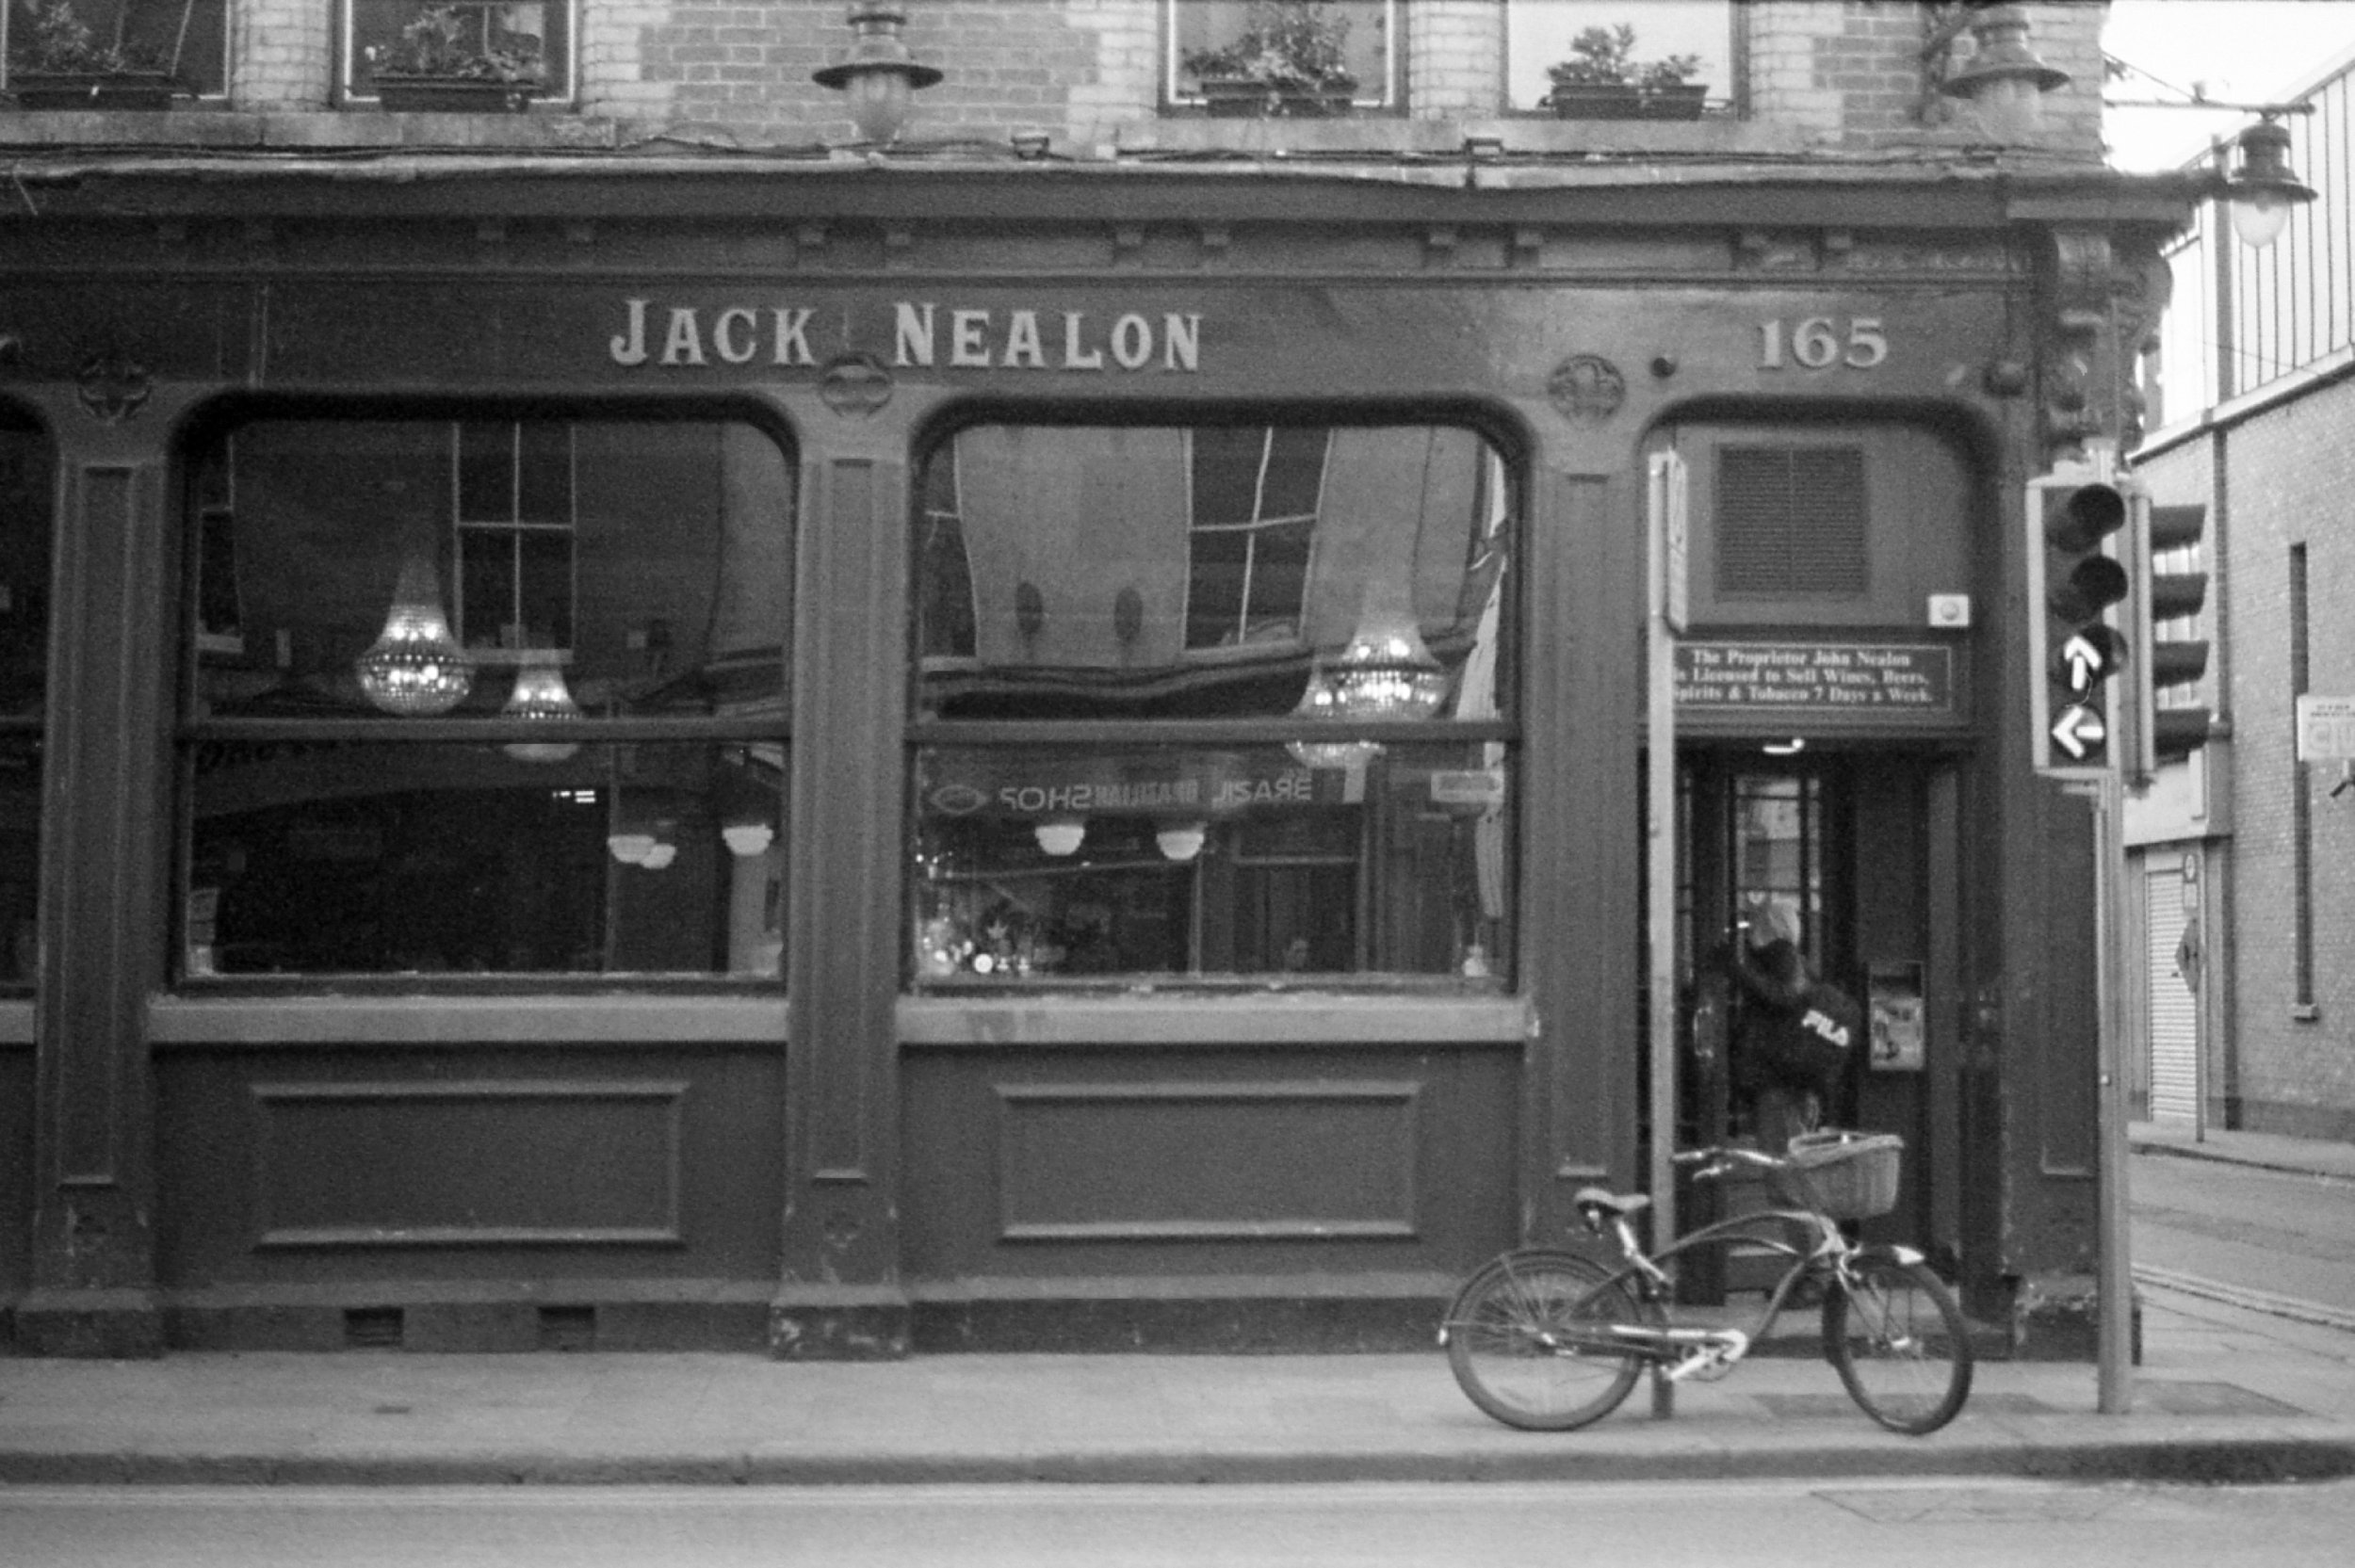 35mm Film Travel Photography in Dublin, Ireland